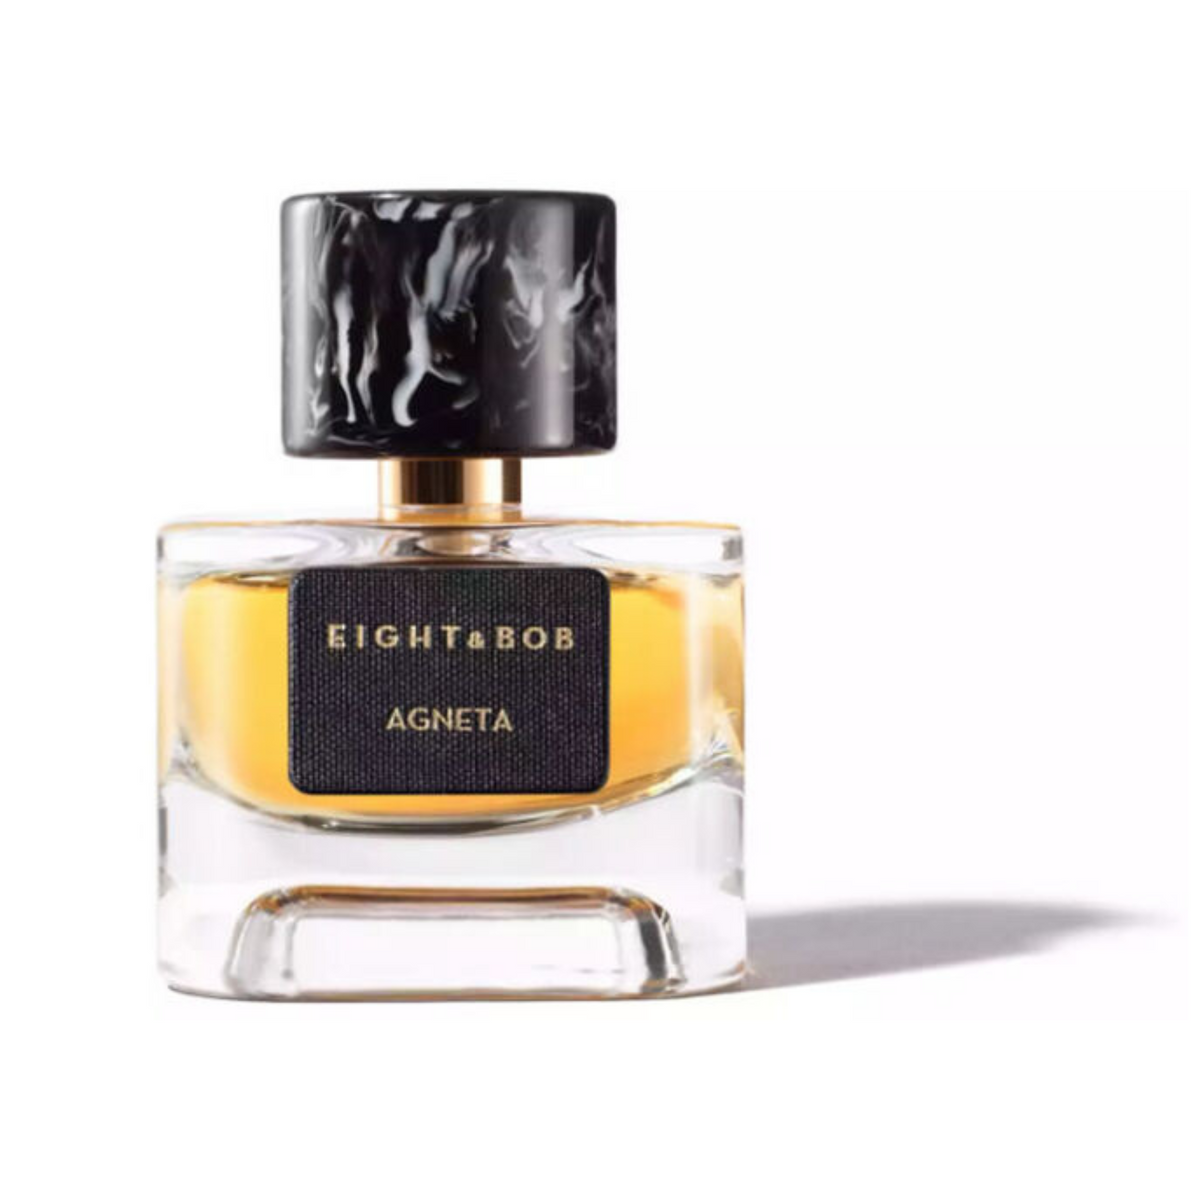 Primary Image of Eight & Bob Agneta Extrait de Parfum (50 ml)